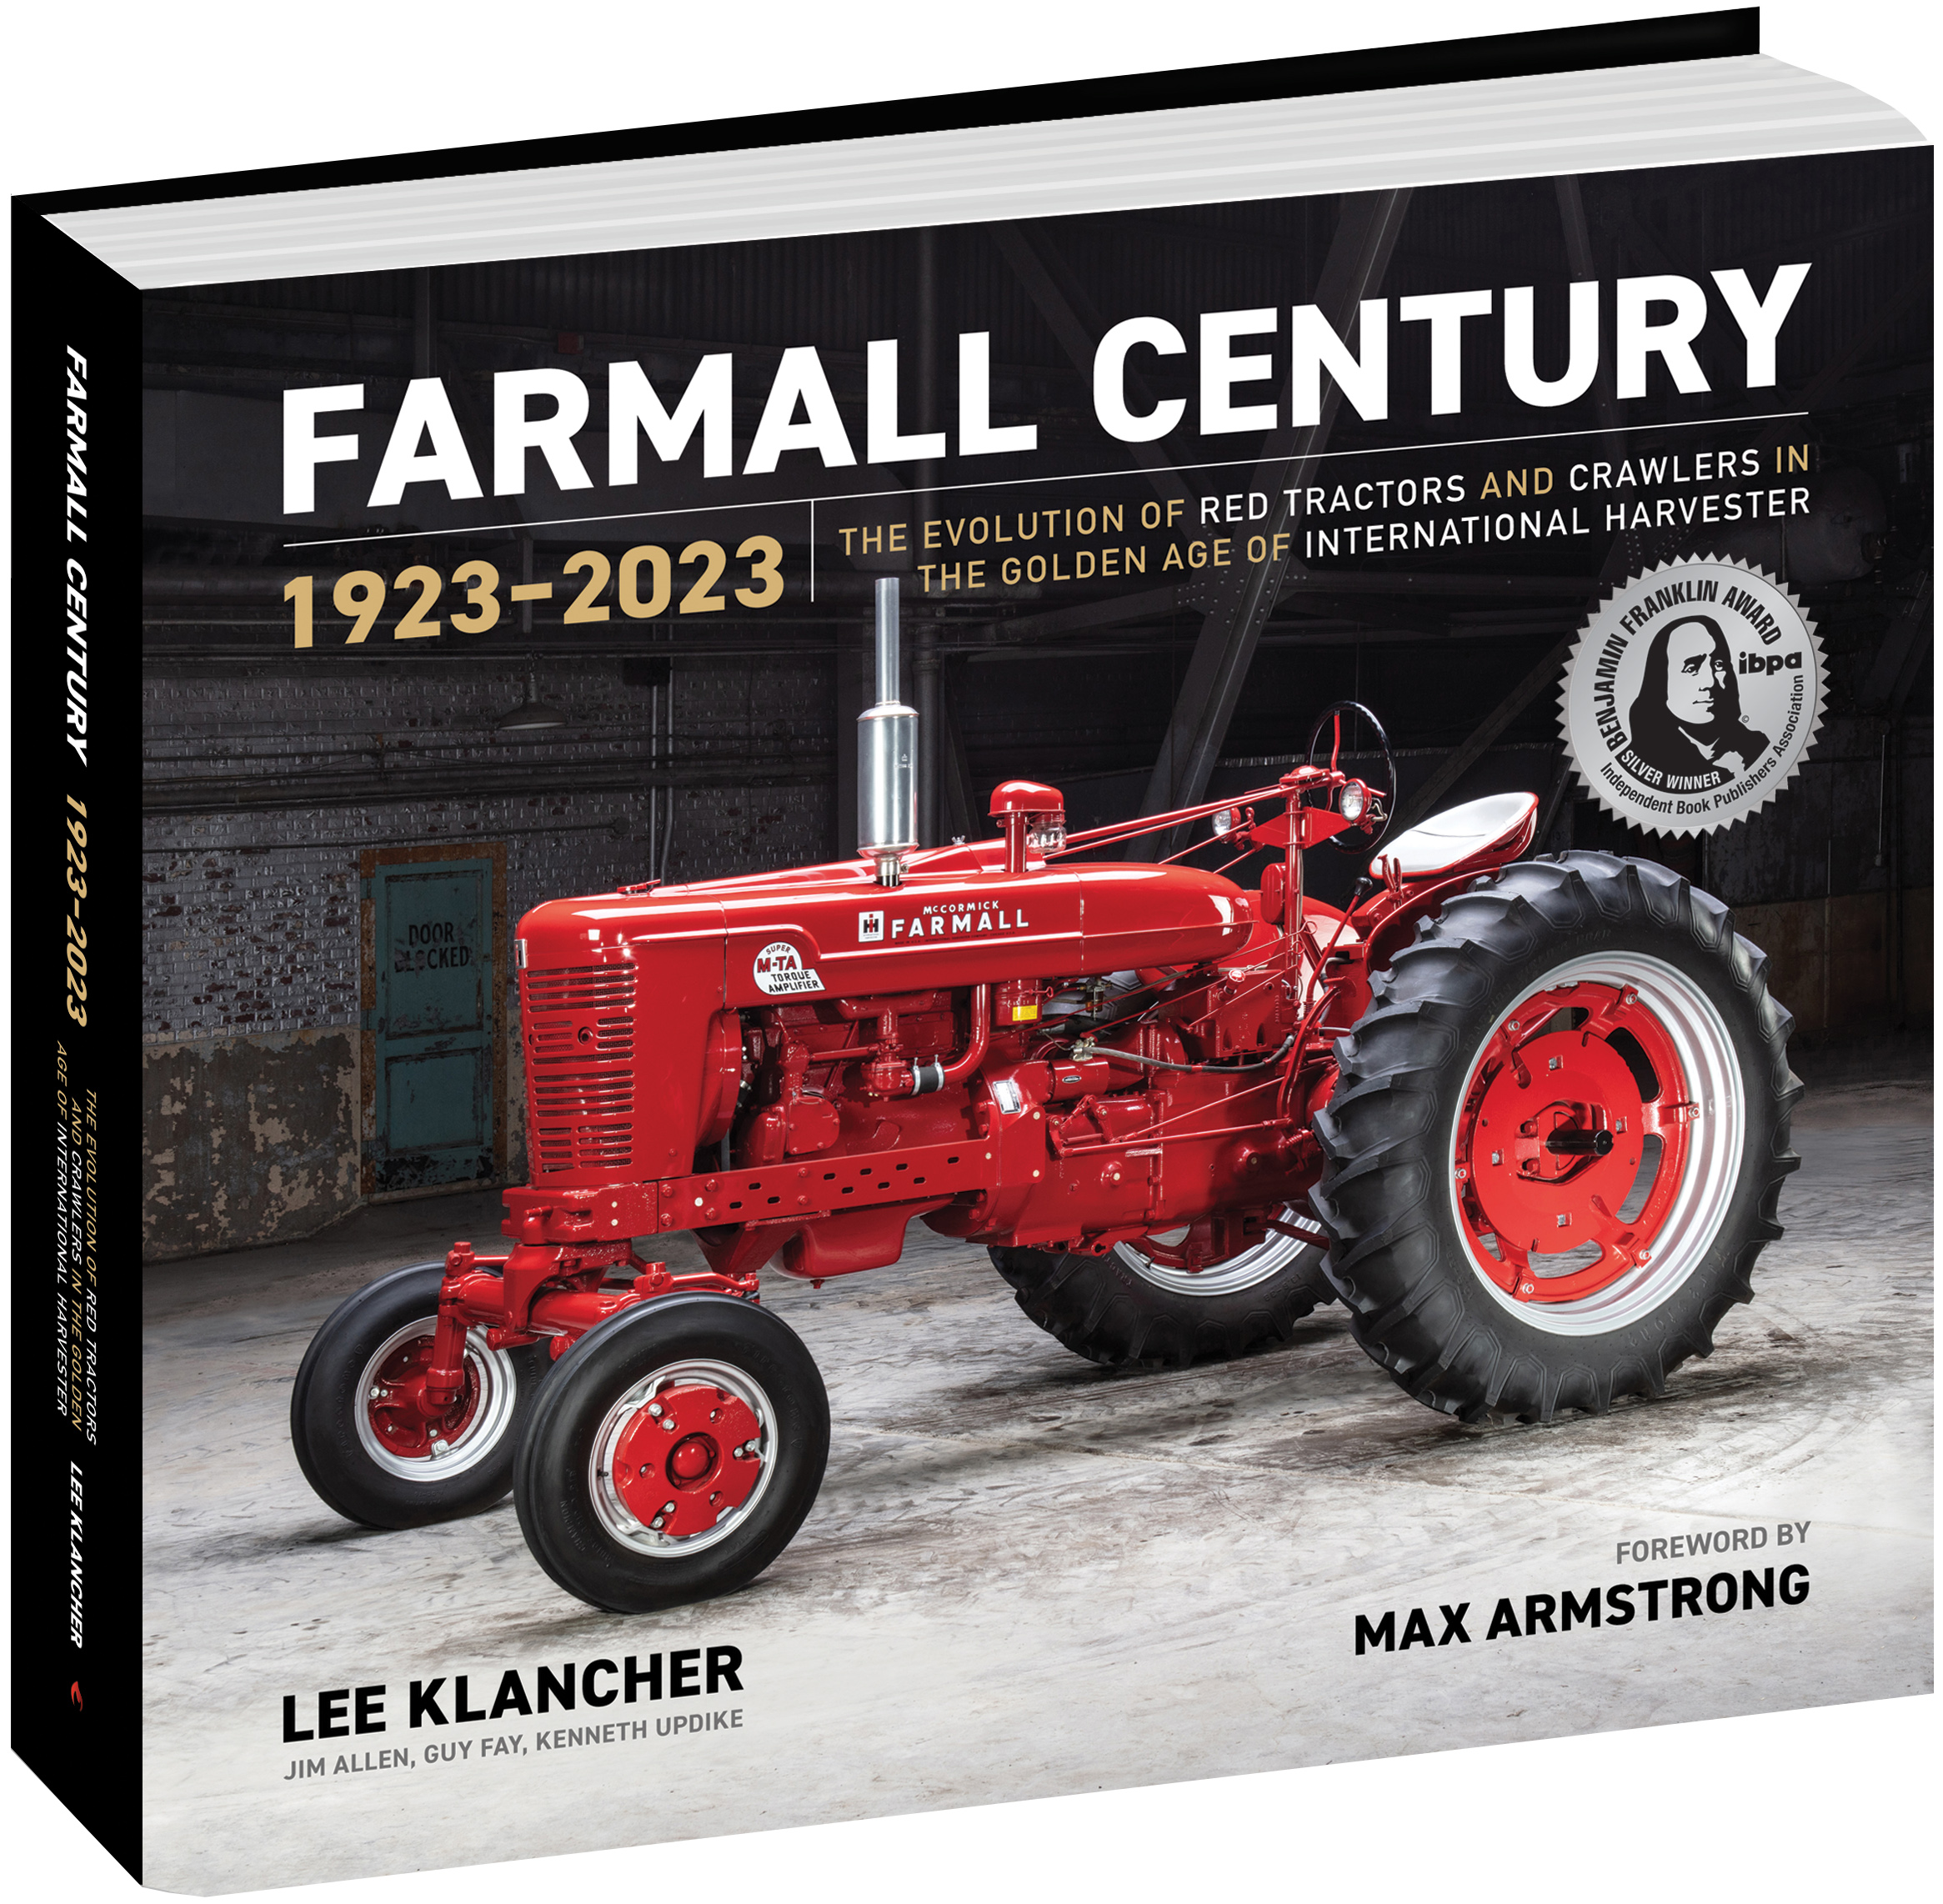 Farmall Century with Award on Cover